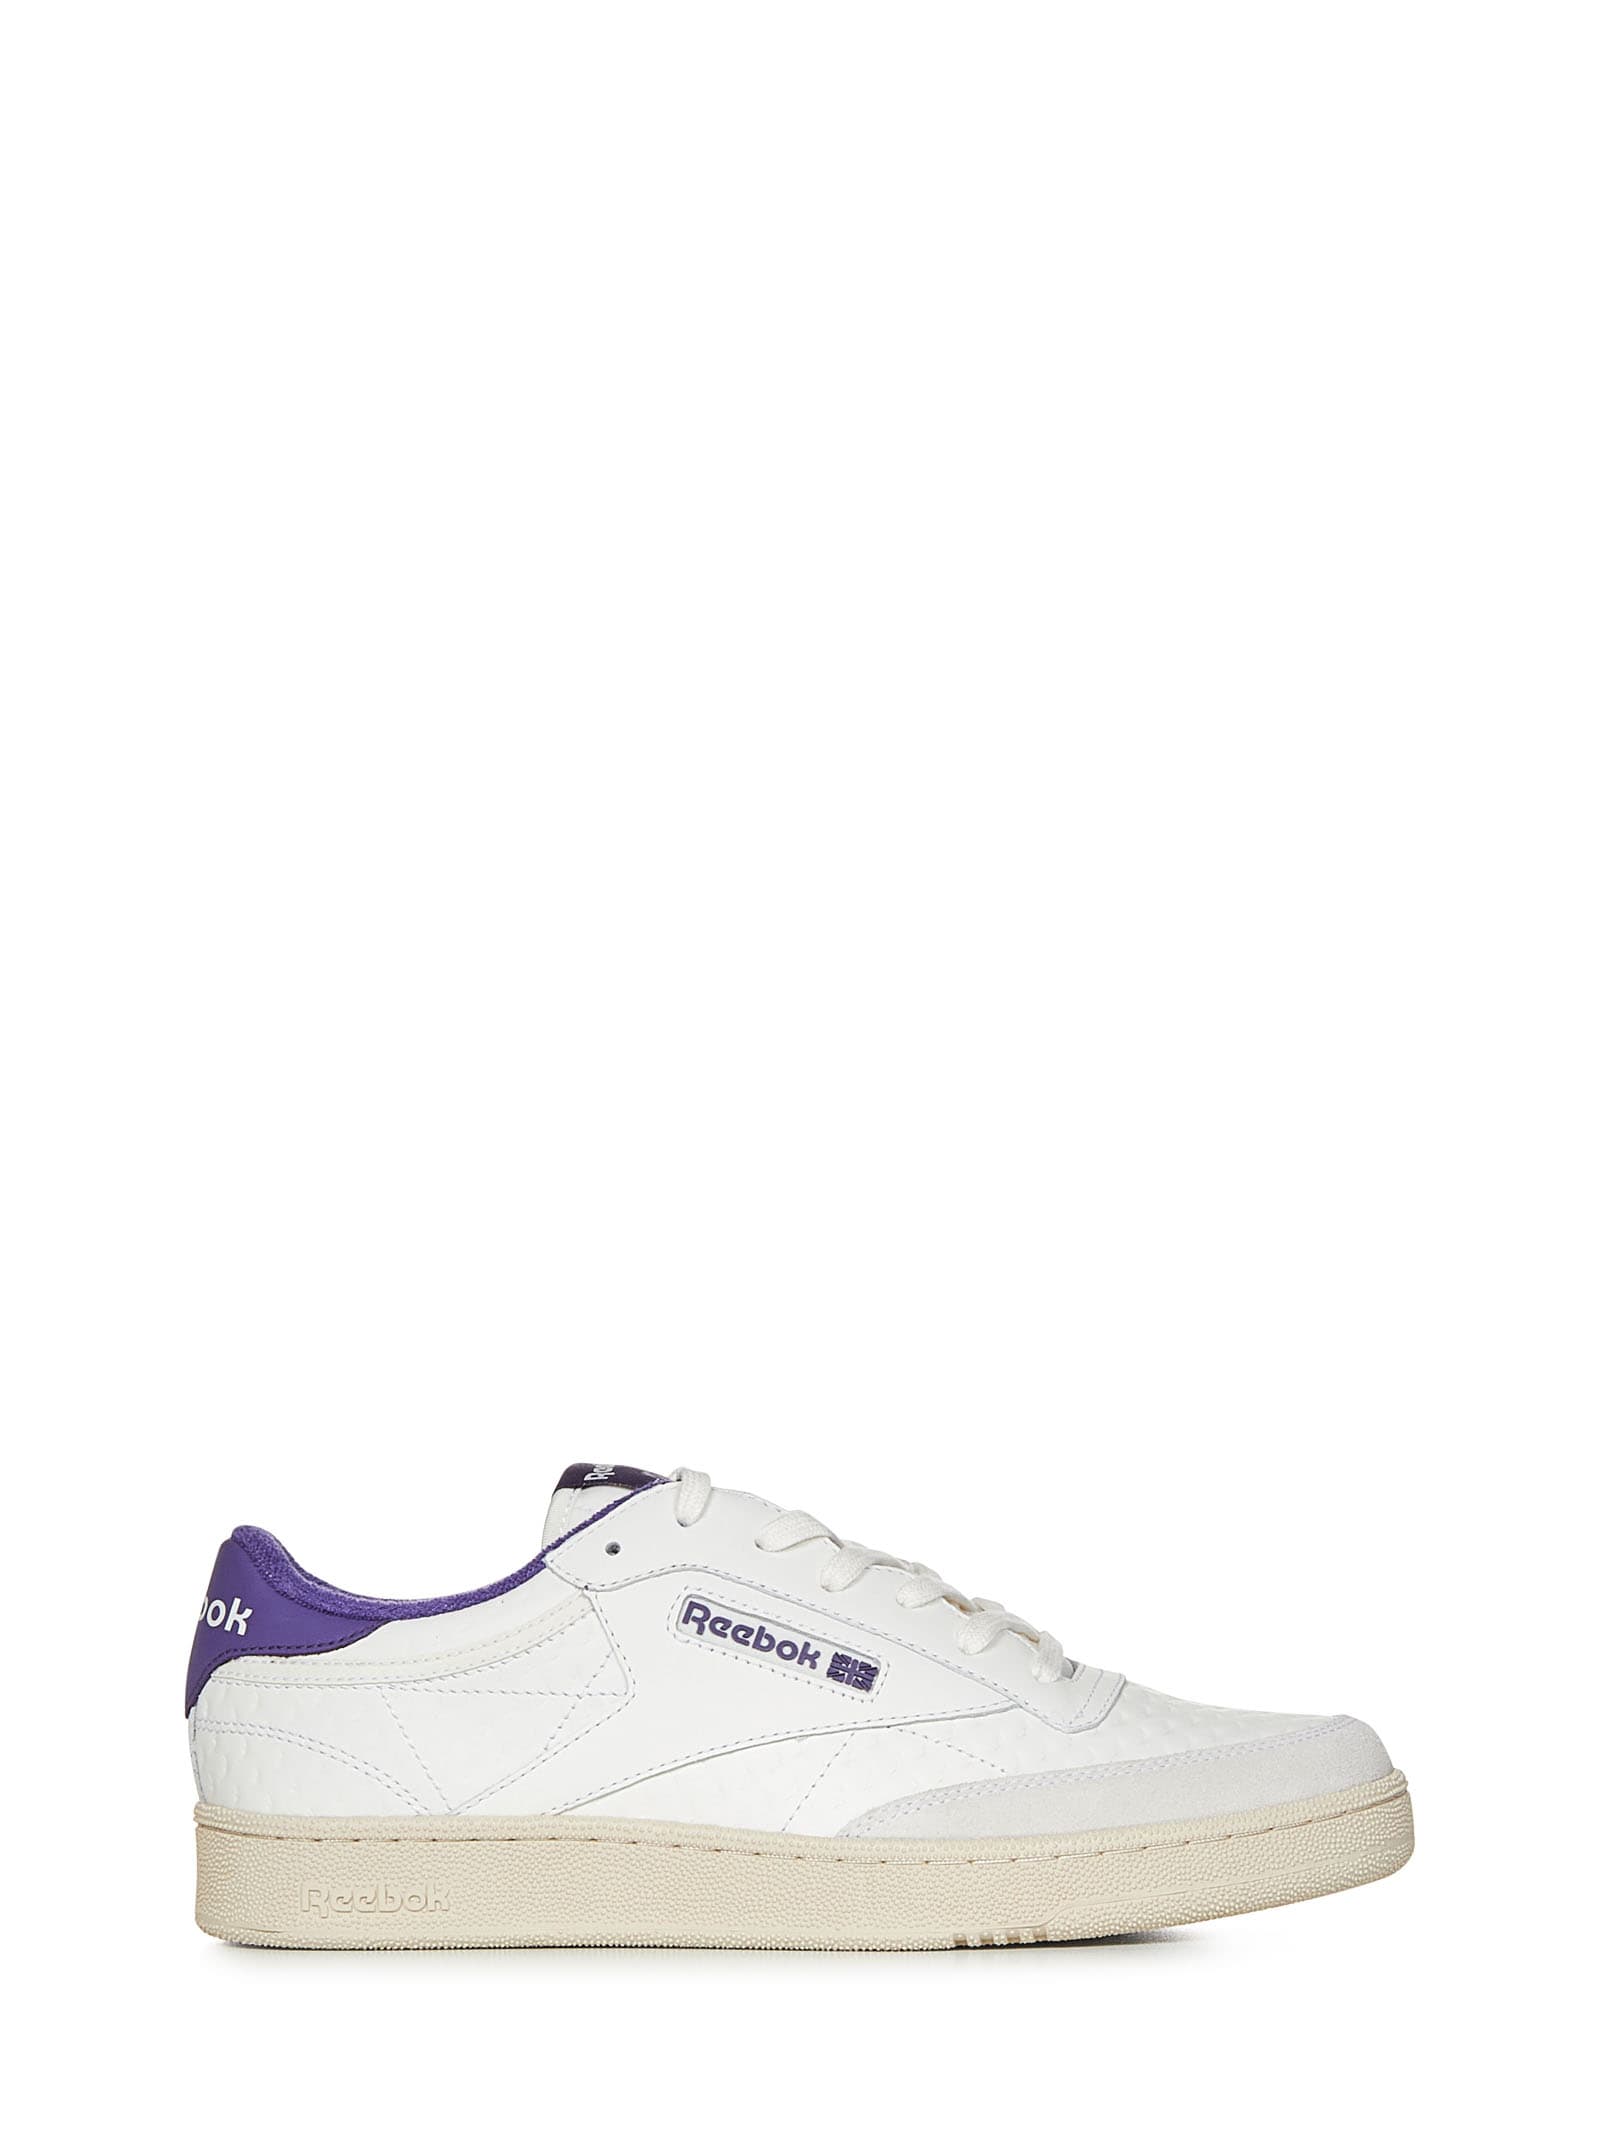 Reebok Club C Sneakers - Violet - female - Size: 8.5